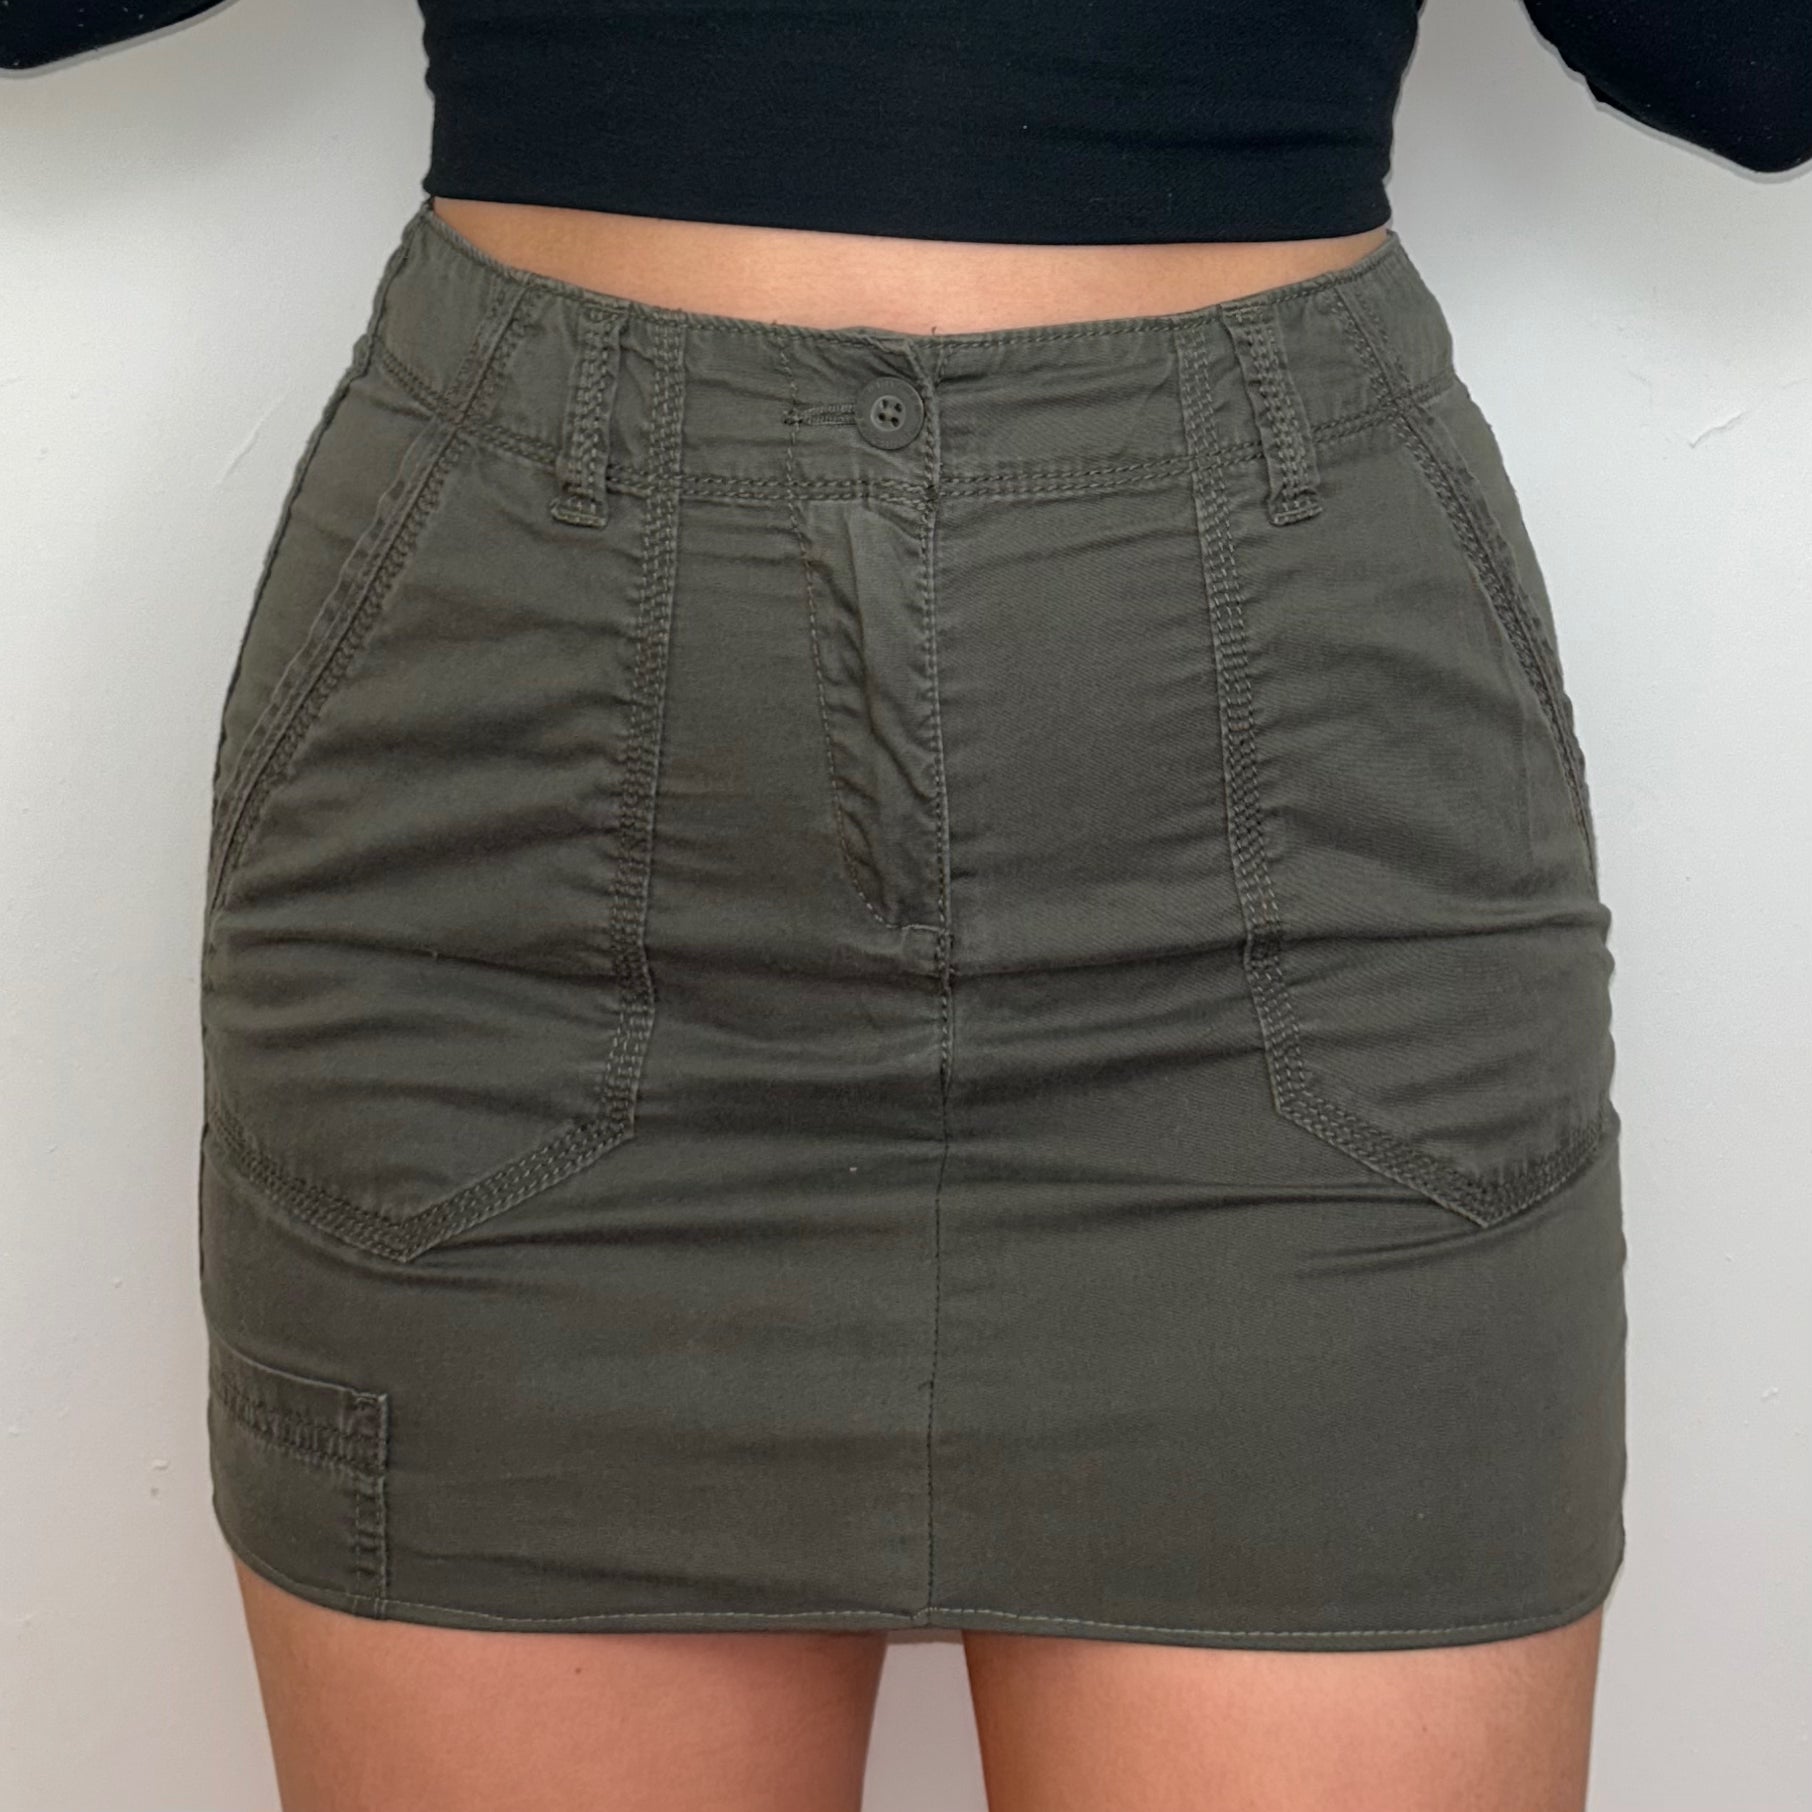 khaki brown cargo mini skirt shown on a model